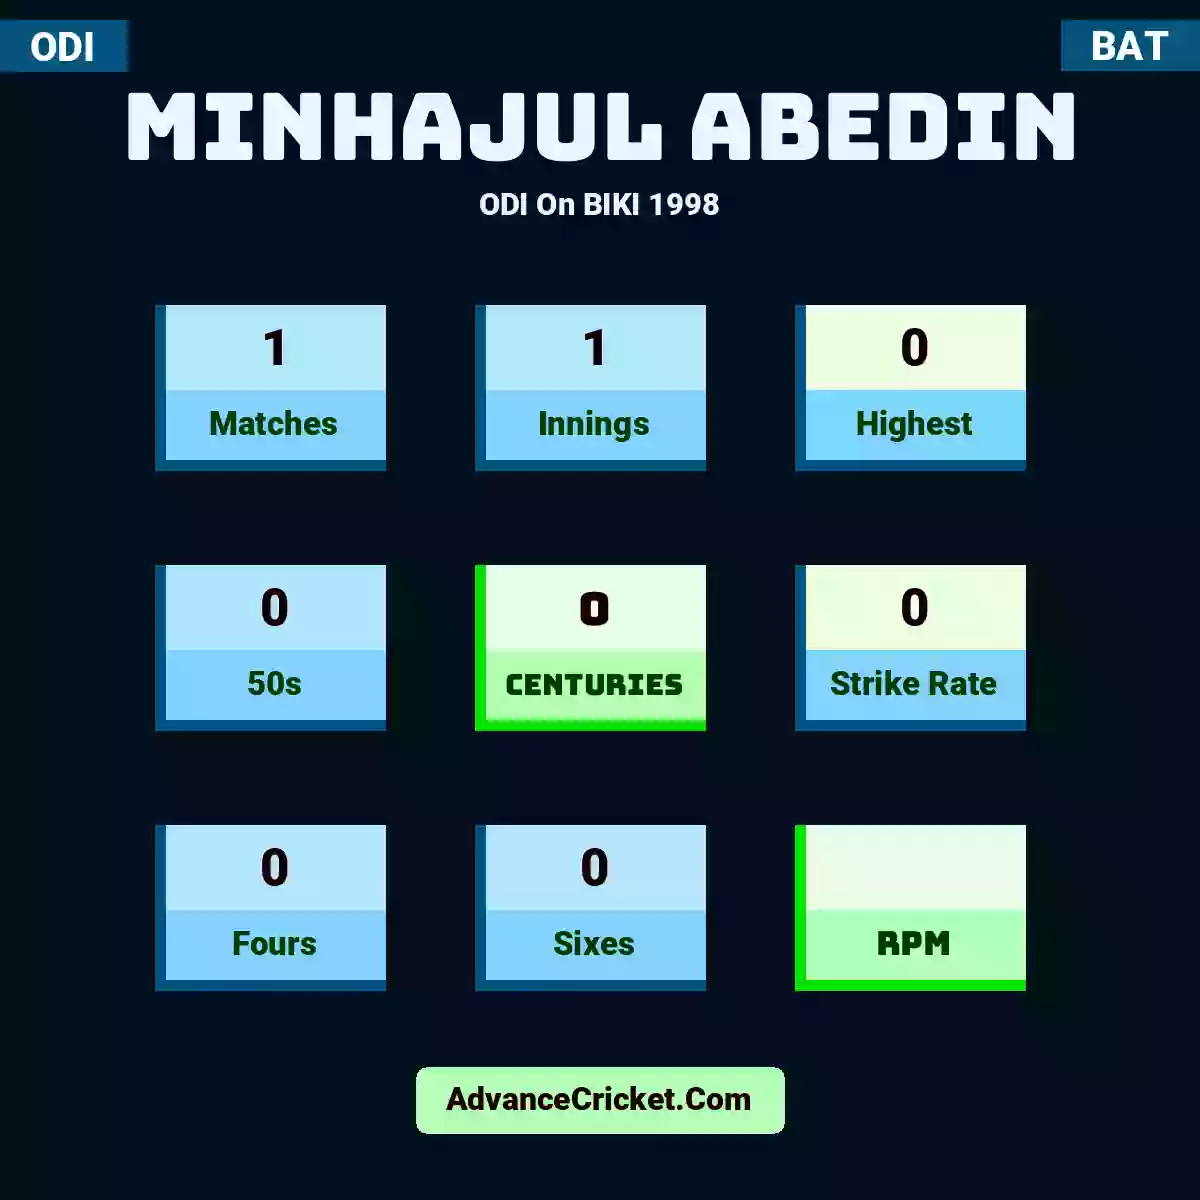 Minhajul Abedin ODI  On BIKI 1998, Minhajul Abedin played 1 matches, scored 0 runs as highest, 0 half-centuries, and 0 centuries, with a strike rate of 0. M.Abedin hit 0 fours and 0 sixes.